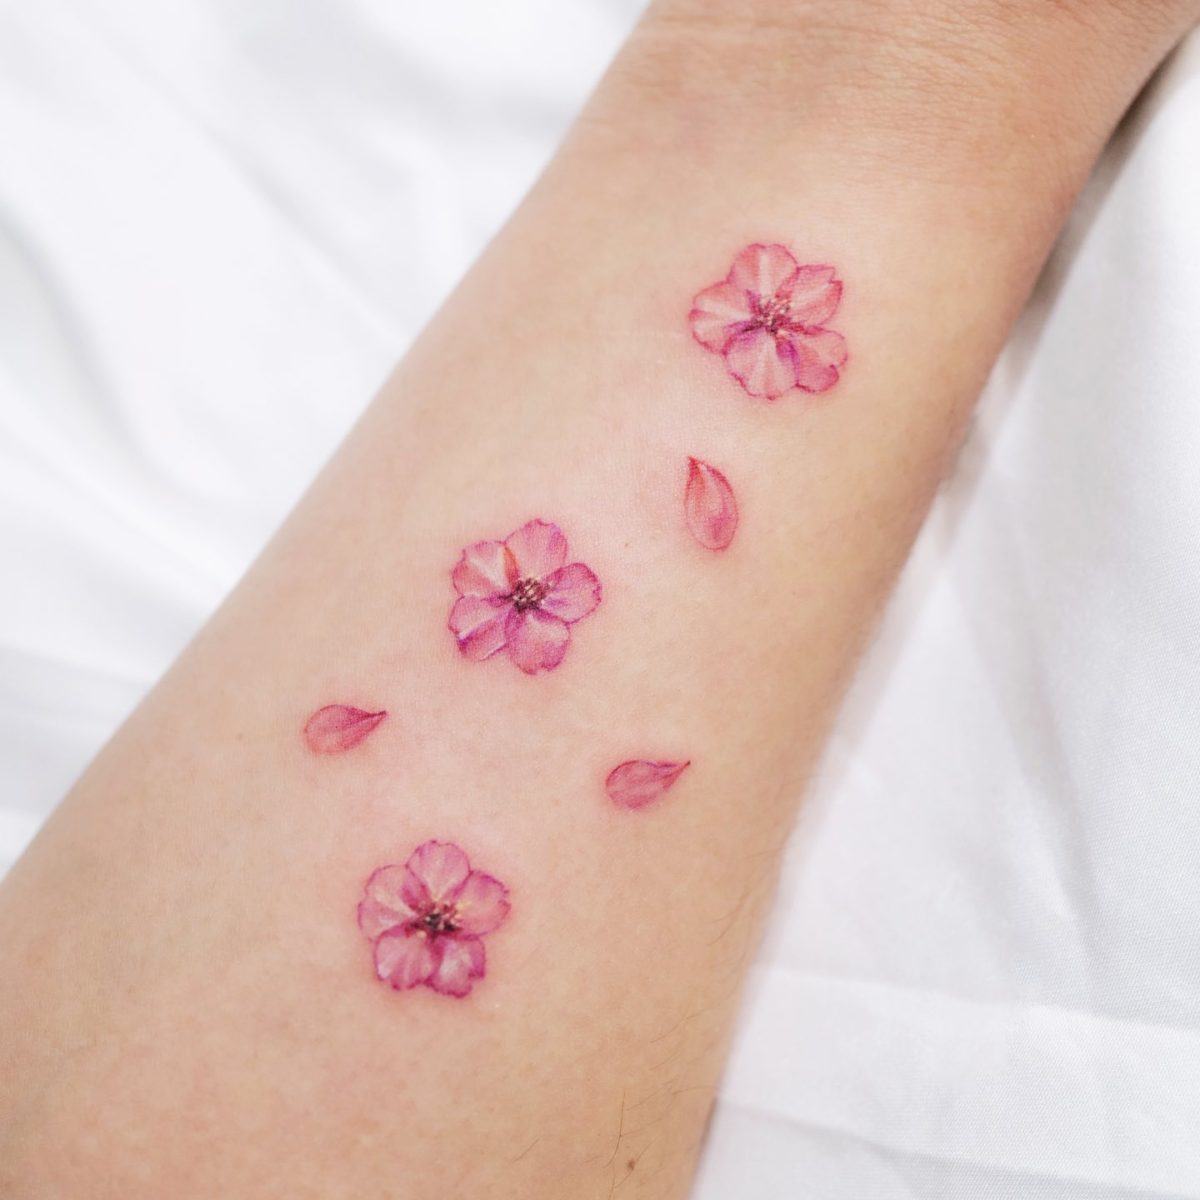 25 Charming Cherry Blossom Tattoo Ideas